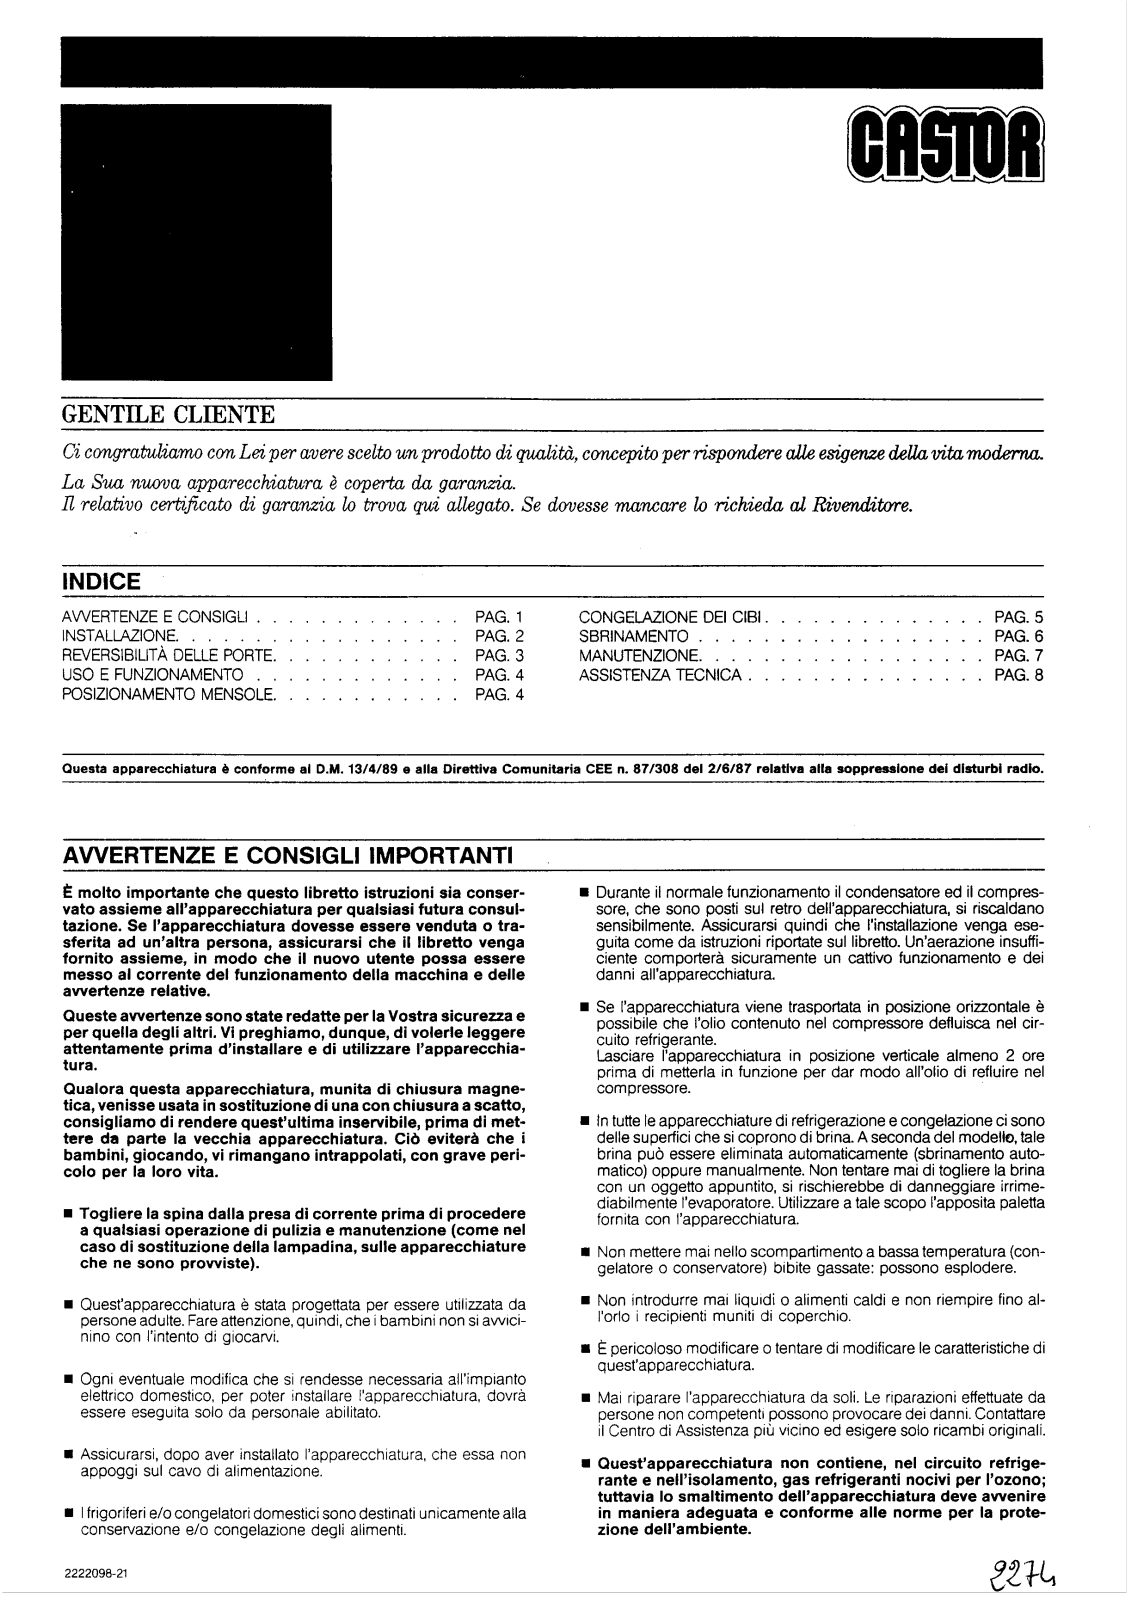 Castor CFD280 Instructions Manual